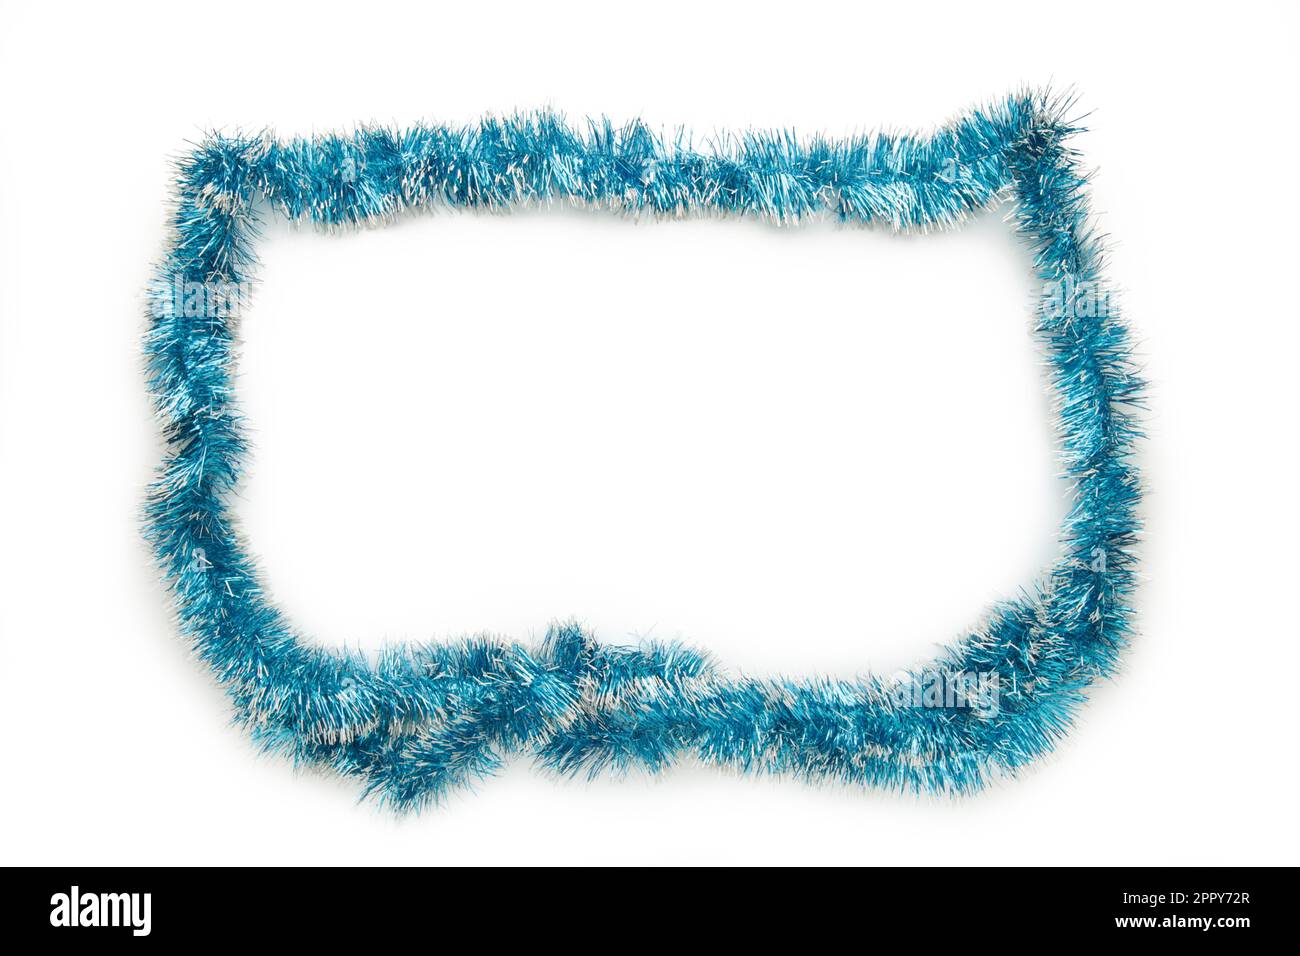 Christmas blue tinsel isolated on white background. Stock Photo